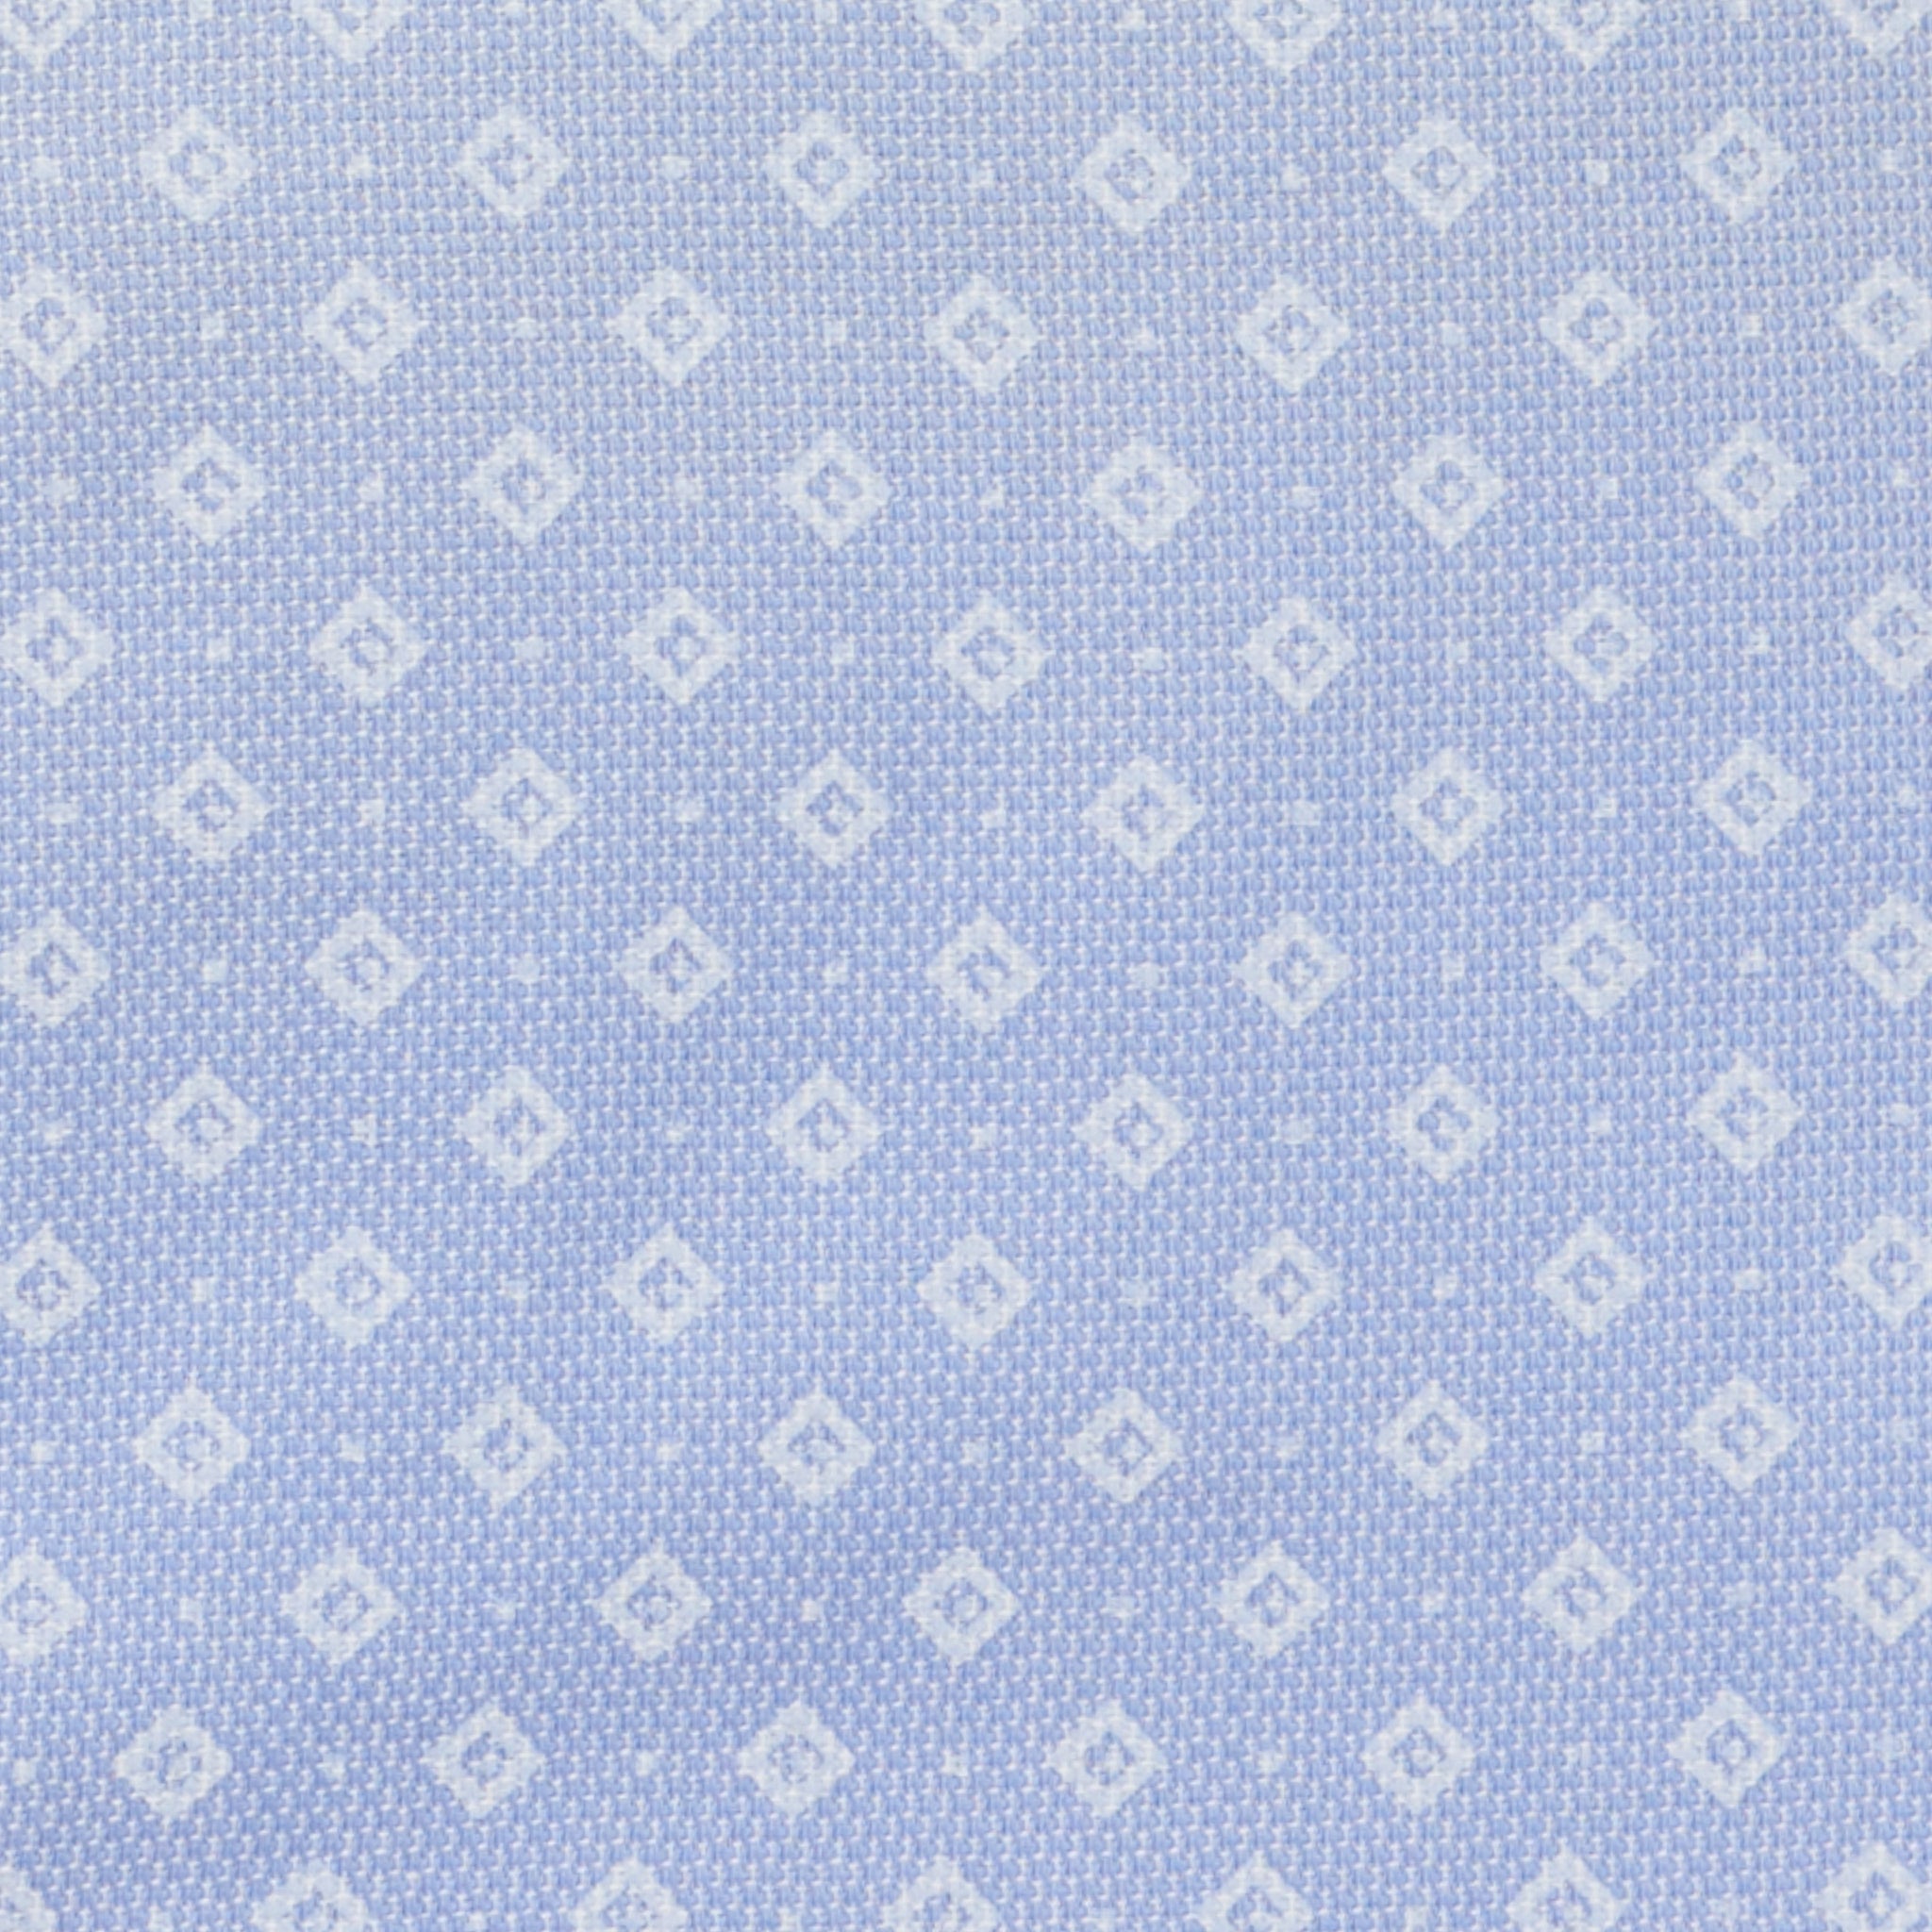 MATTABISCH by Kiton Handmade Blue Rhombus Dot Shirt 40 NEW US 15.75 Slim Fit